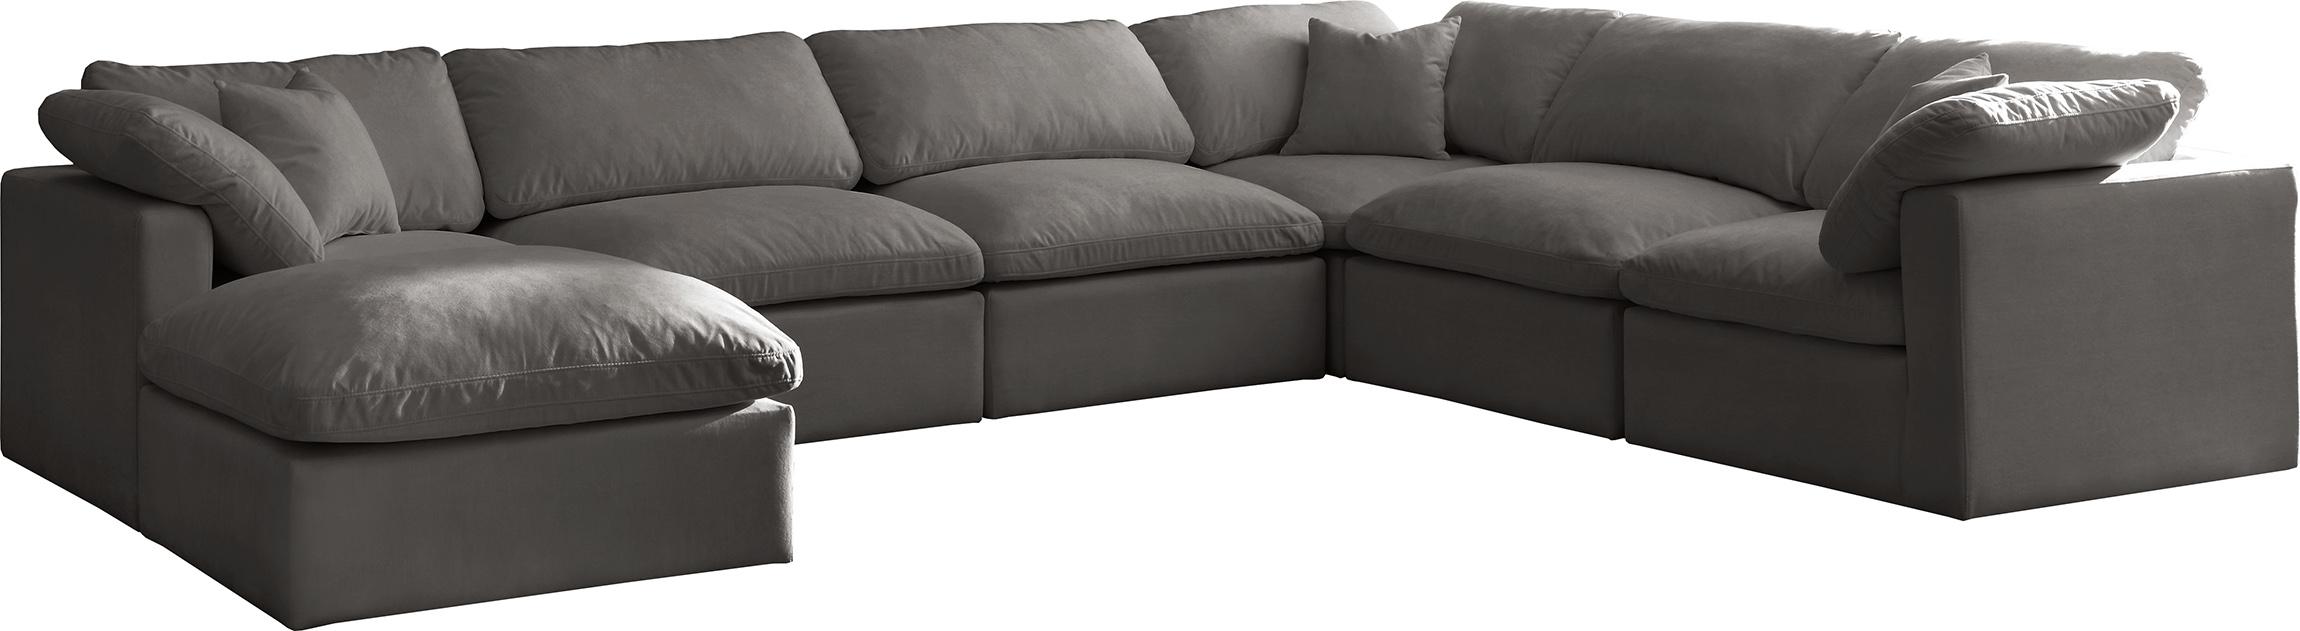 Contemporary, Modern Modular Sectional Sofa 602Grey-Sec7A 602Grey-Sec7A in Gray Fabric